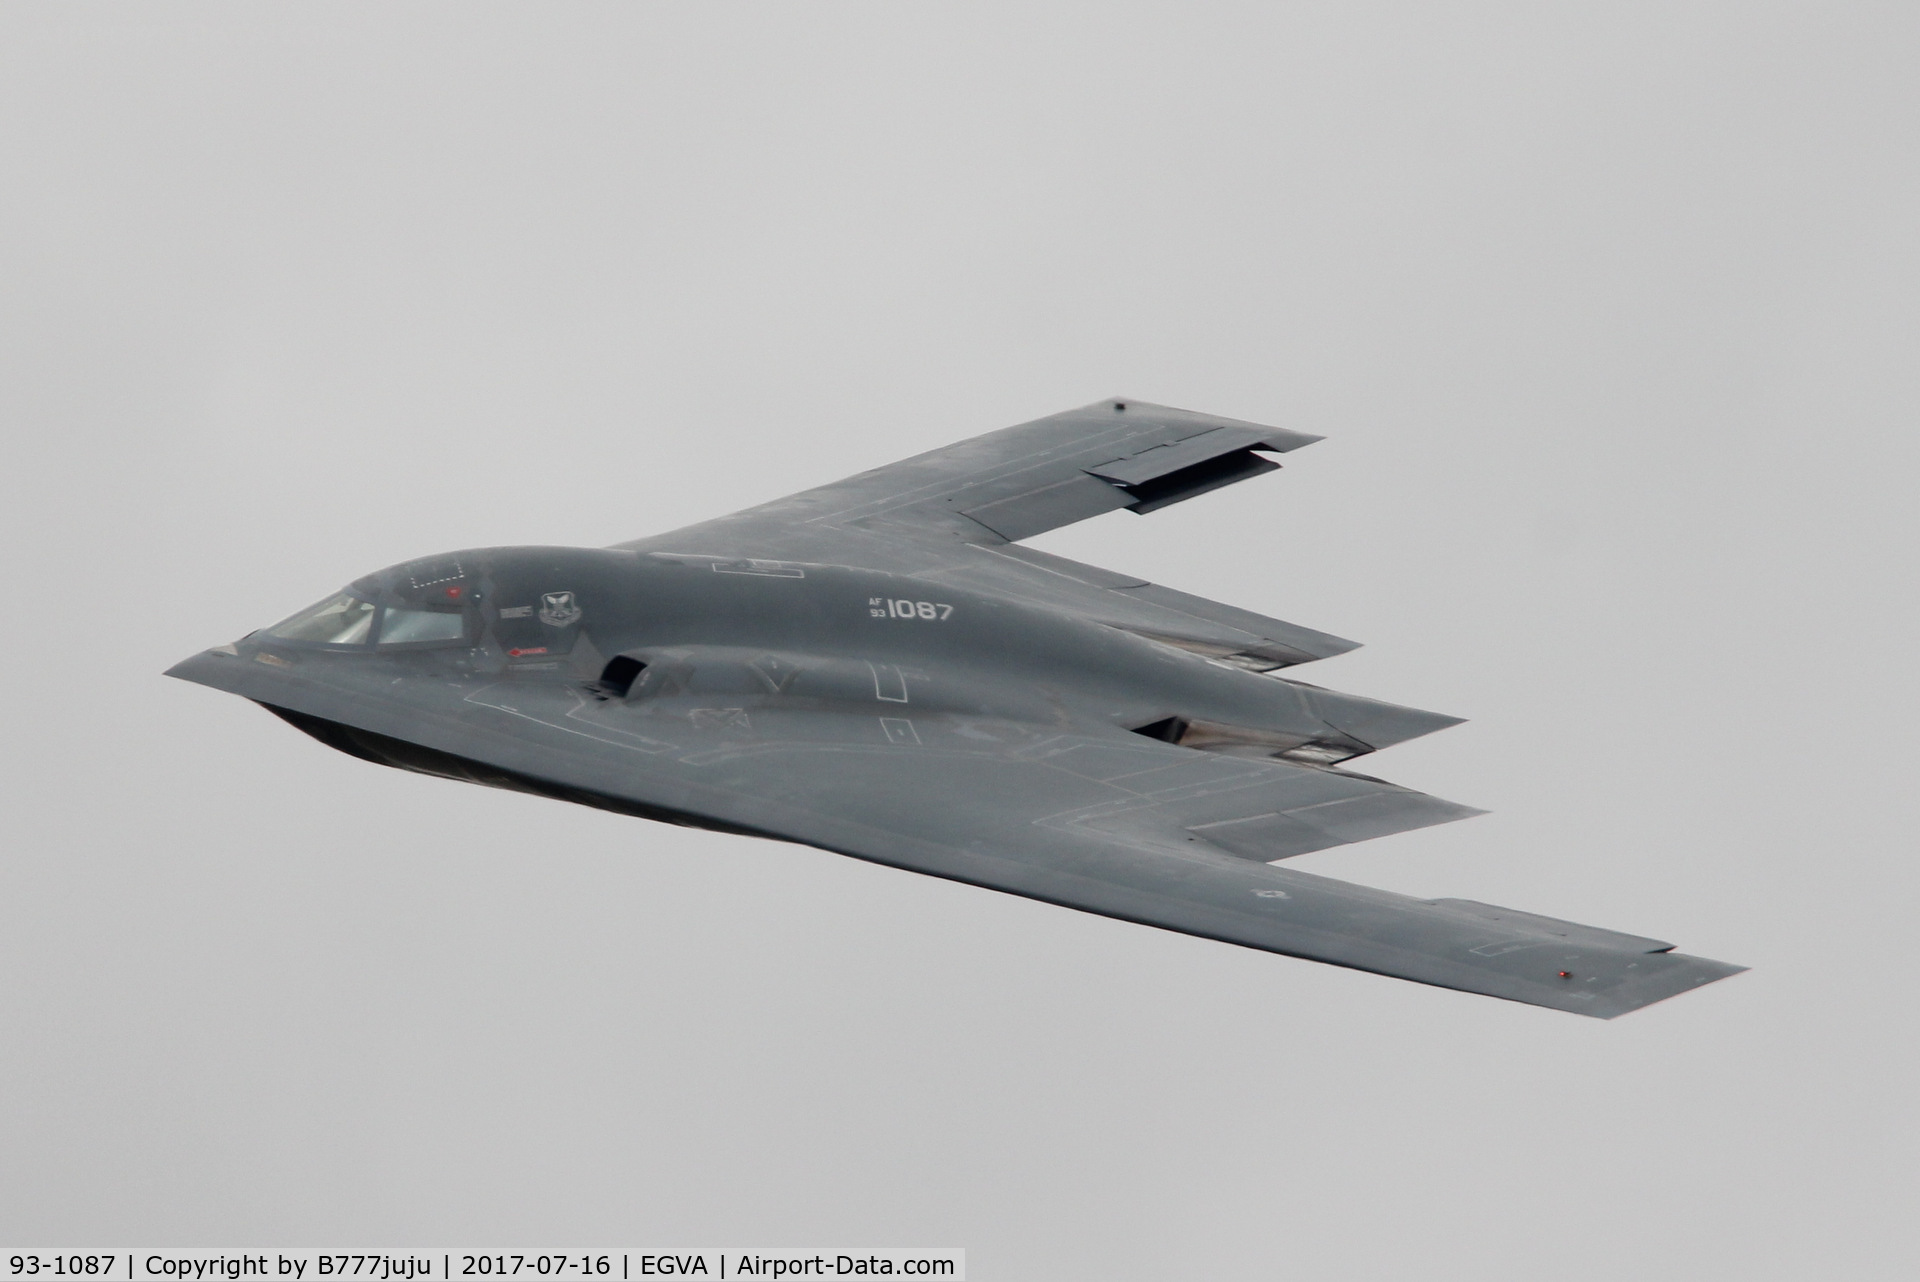 93-1087, 1993 Northrop Grumman B-2A Spirit C/N 1020/AV-20, at TATOO 2017